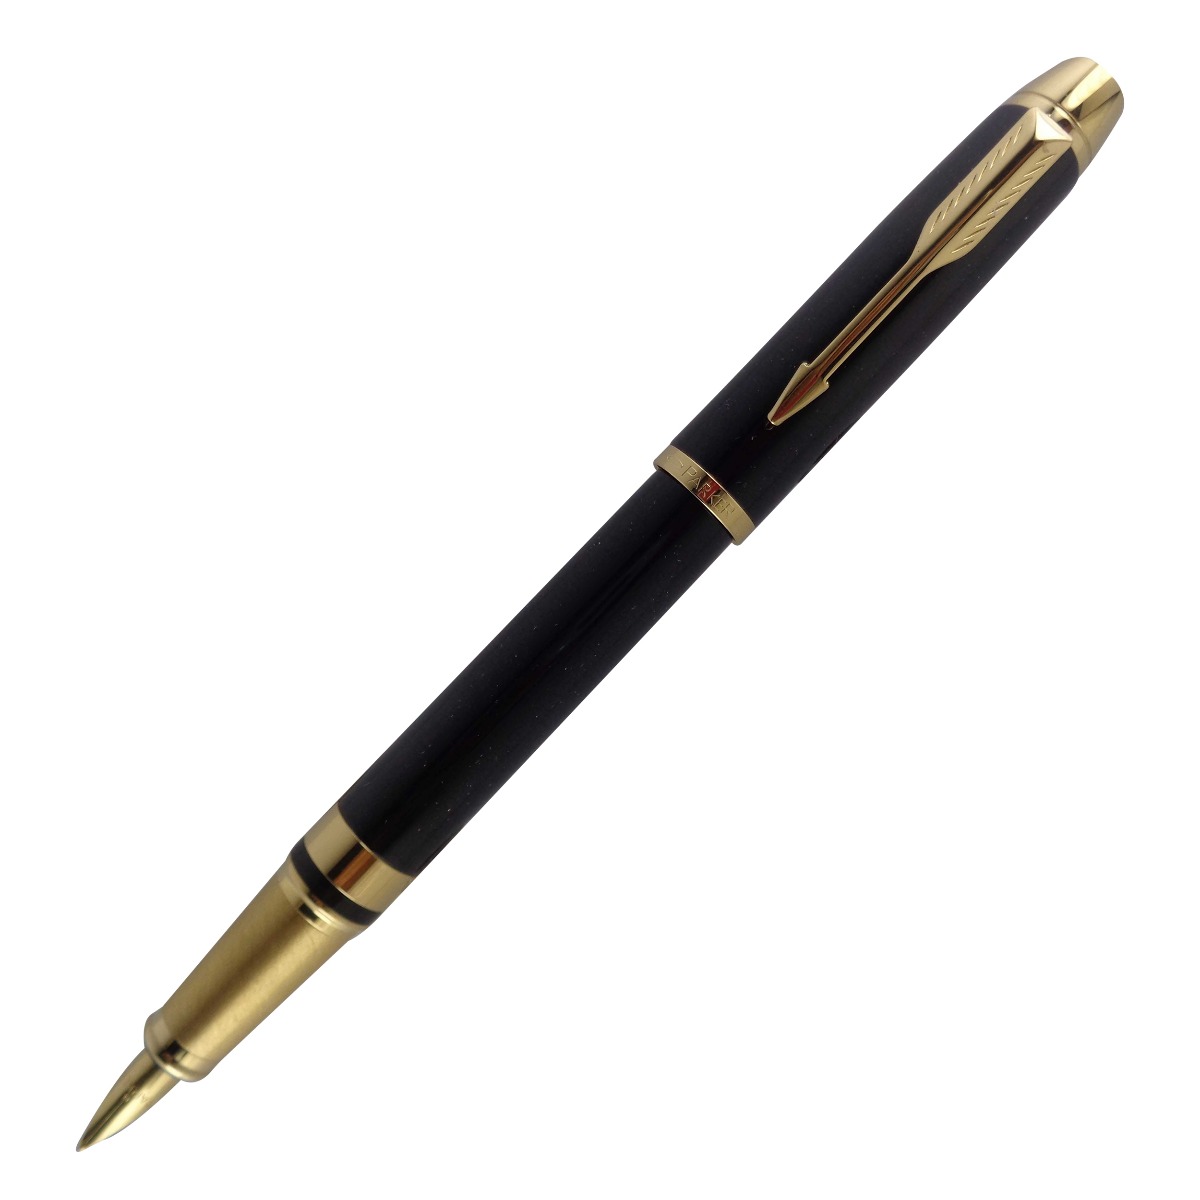 Parker Model: 14927 Odyssey Black color body with golden color clip medium tip cap type fountain pen